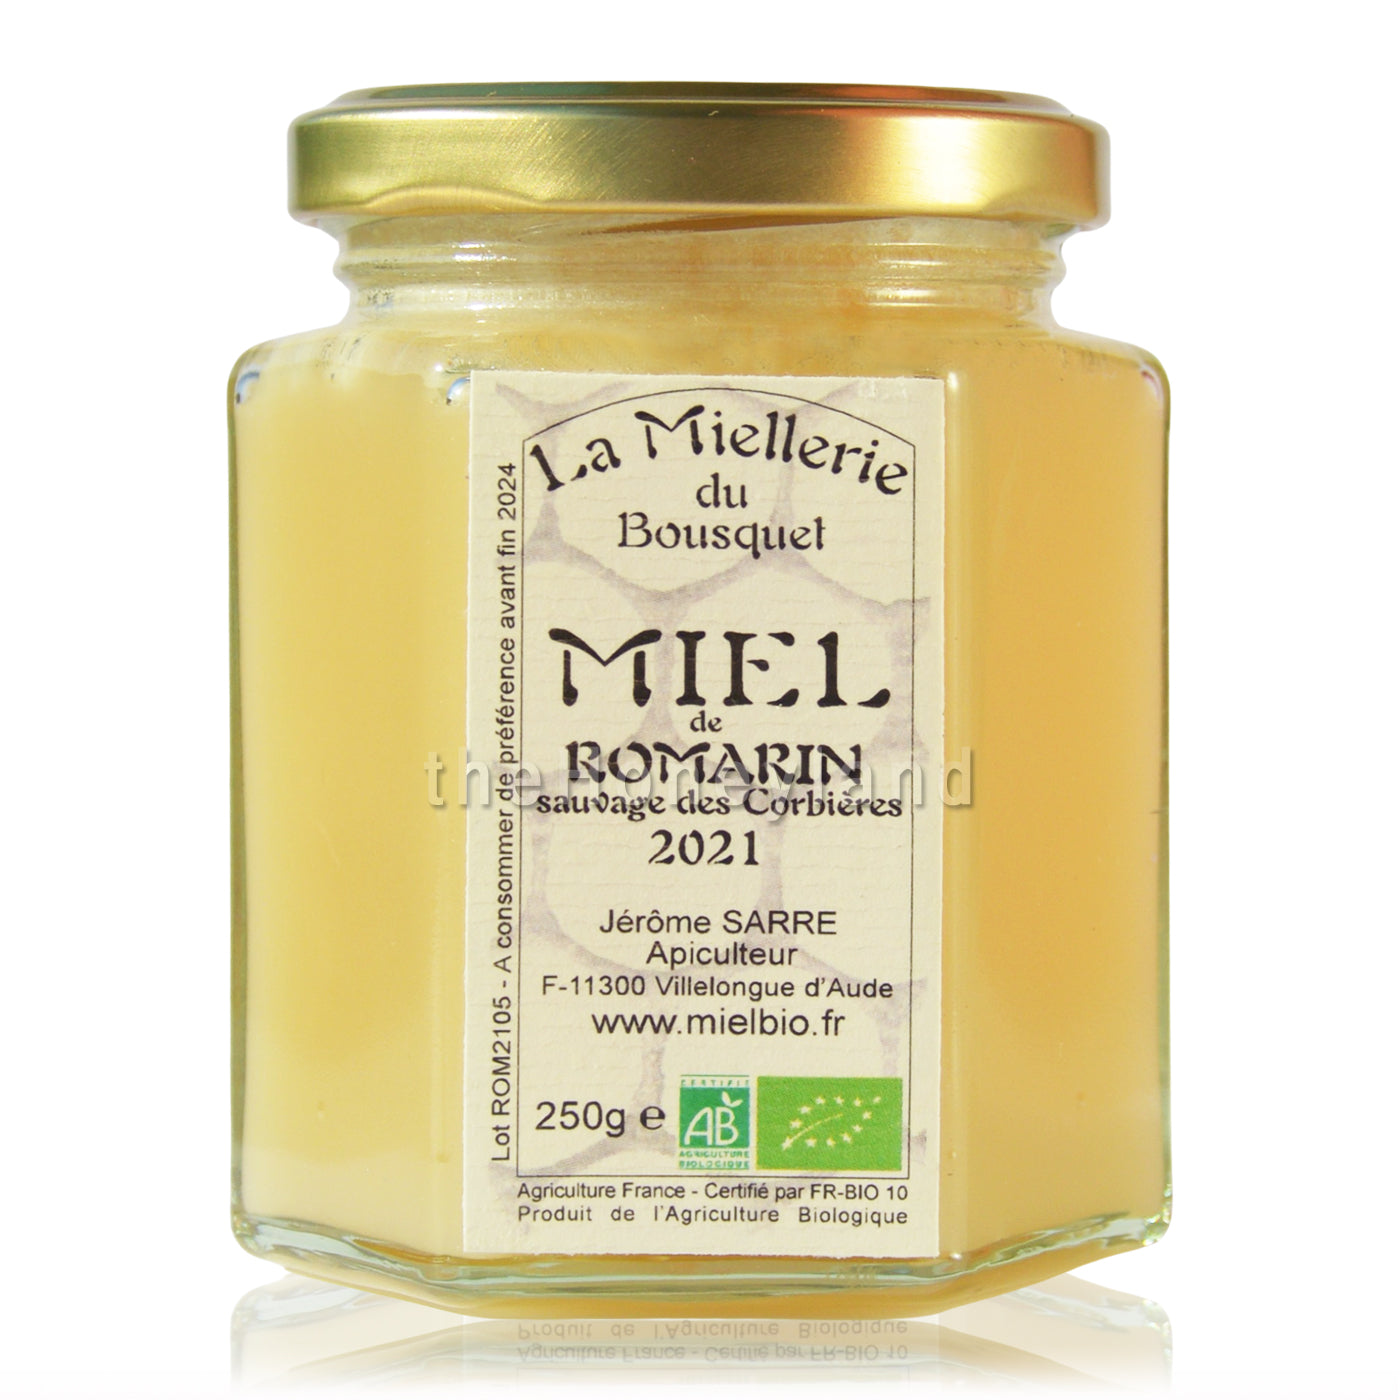 Organic wild rosemary honey from Corbières